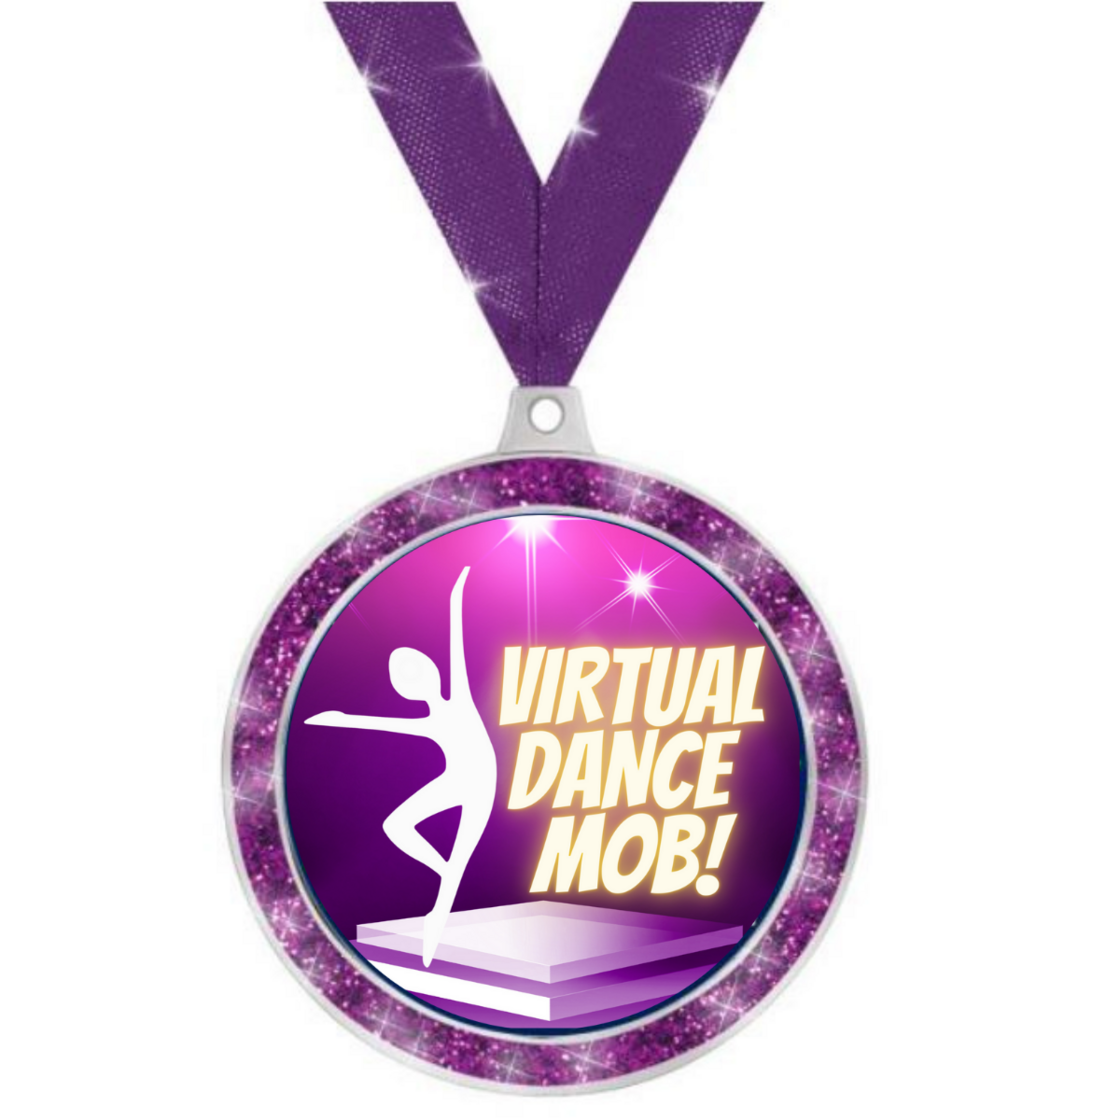 Virtual Dance Mob (3)